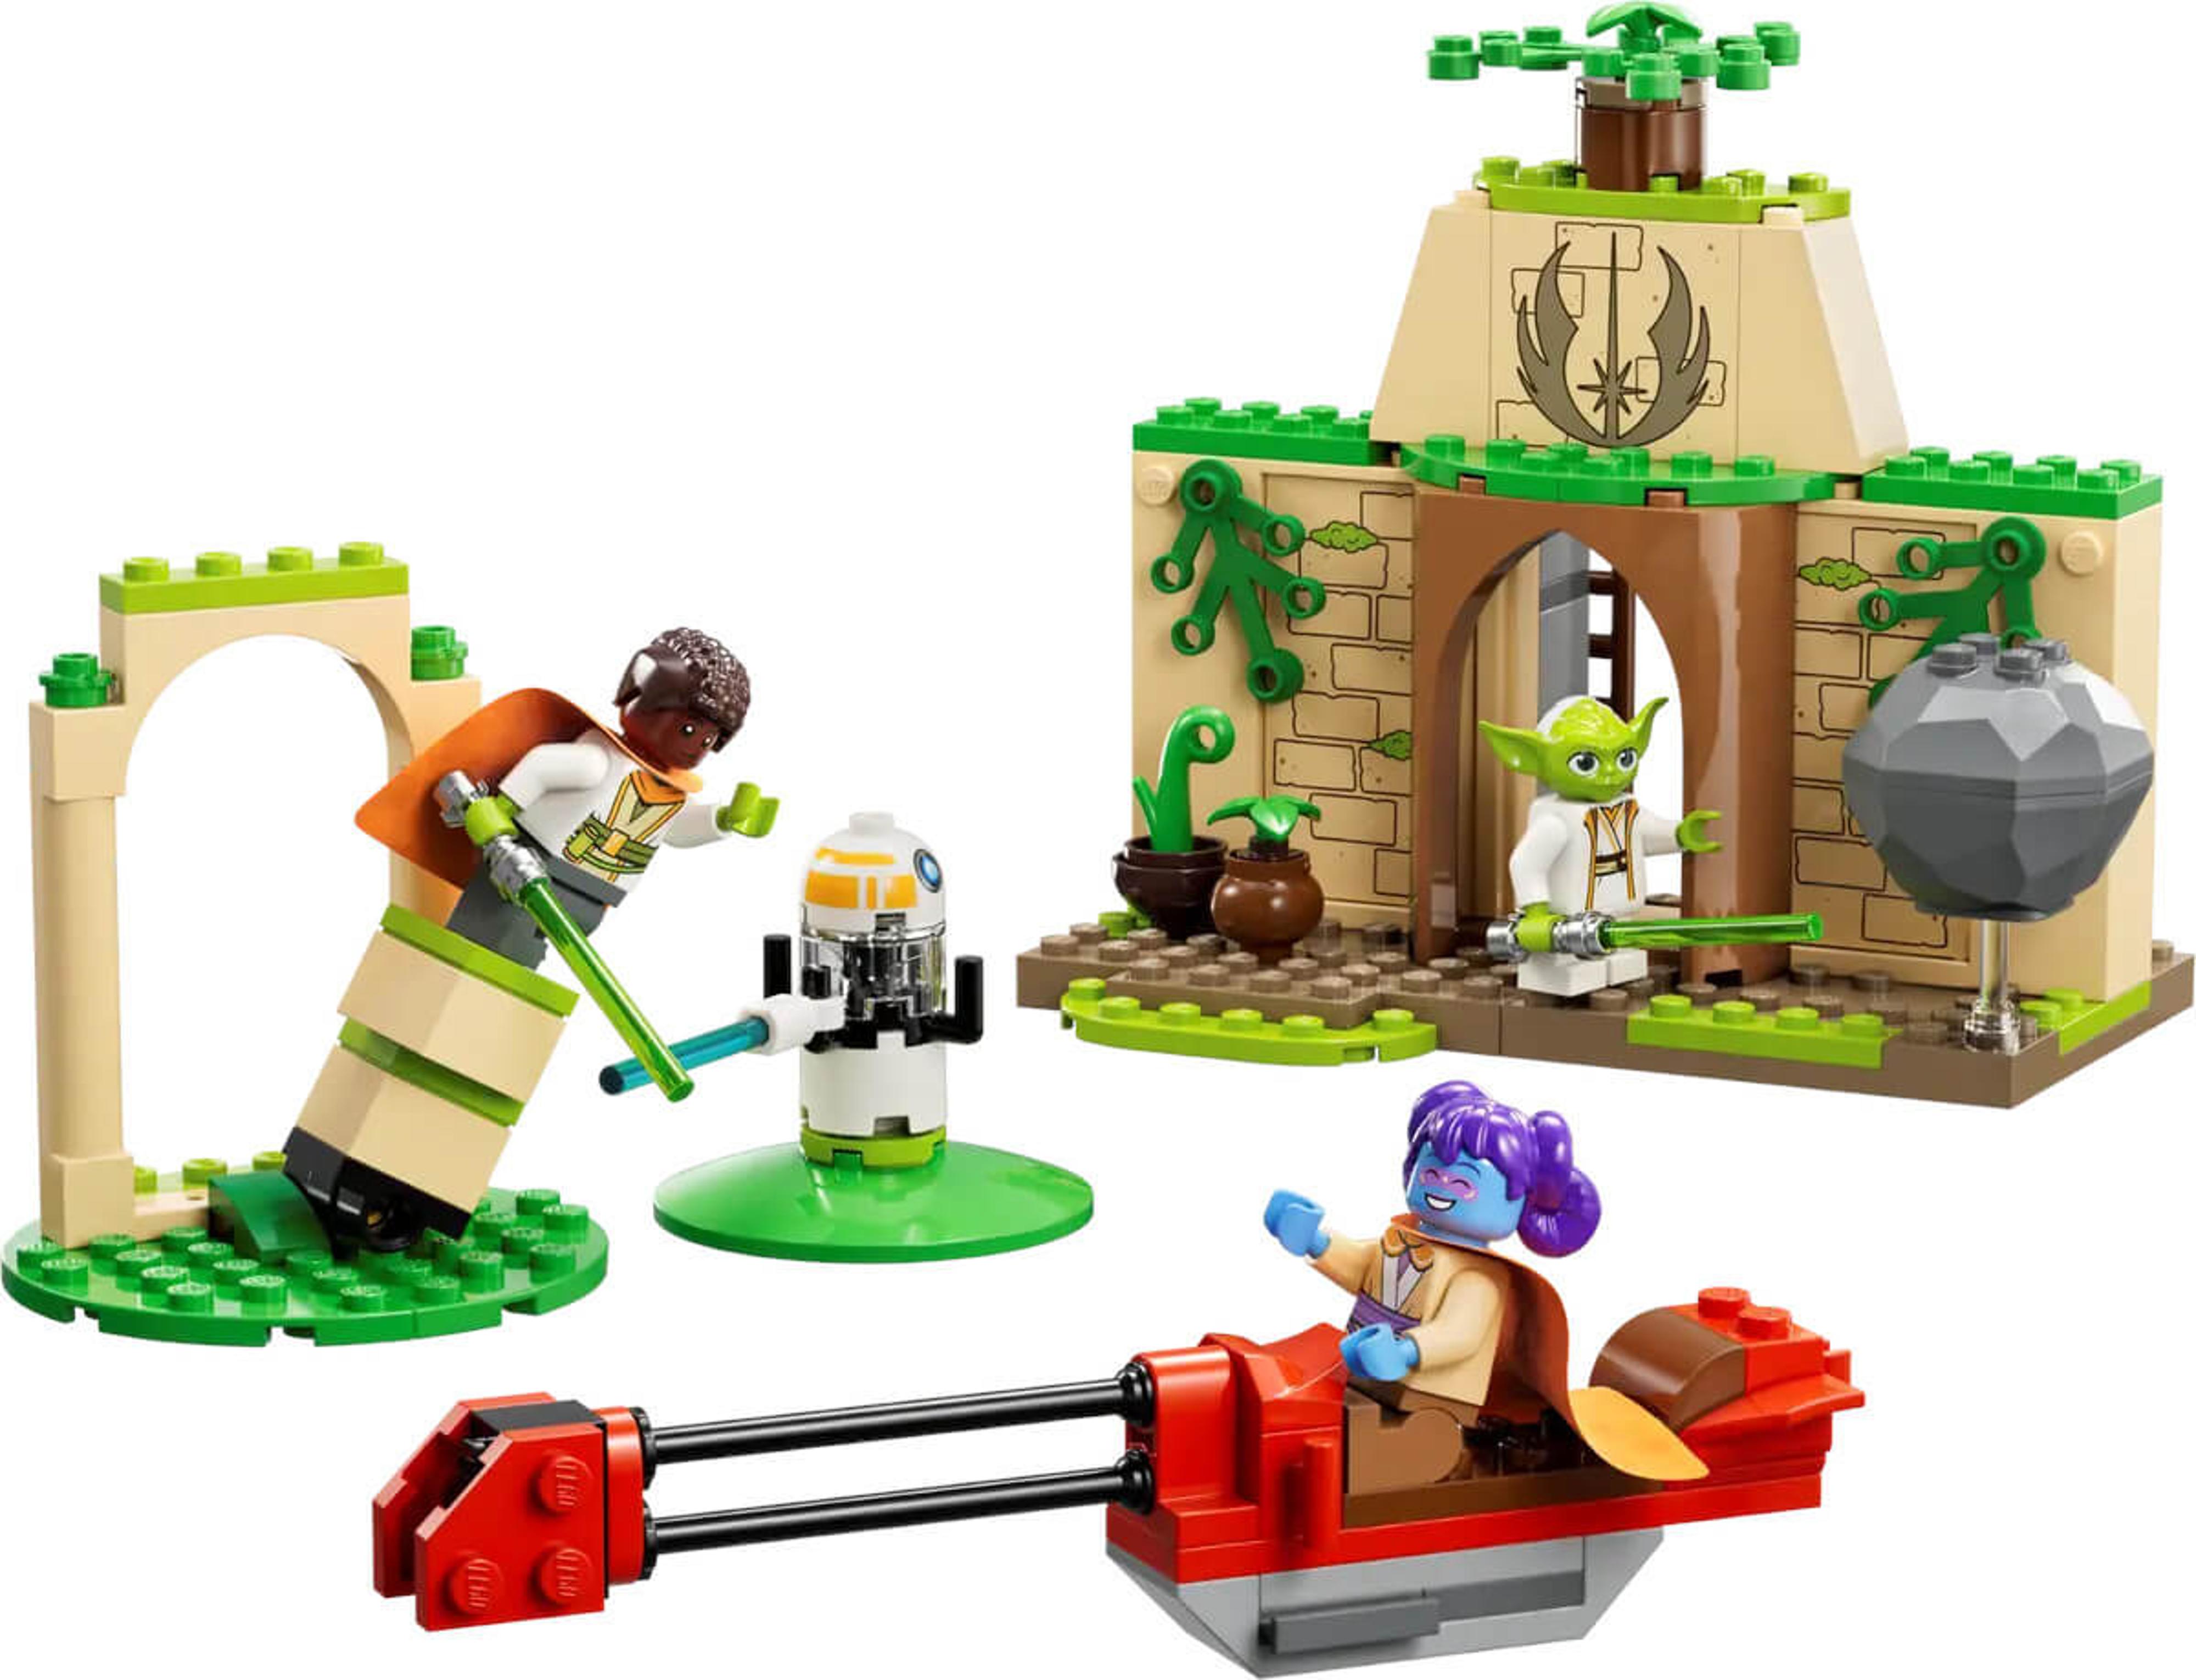 LEGO Star Wars - Tenoo Jedi Temple